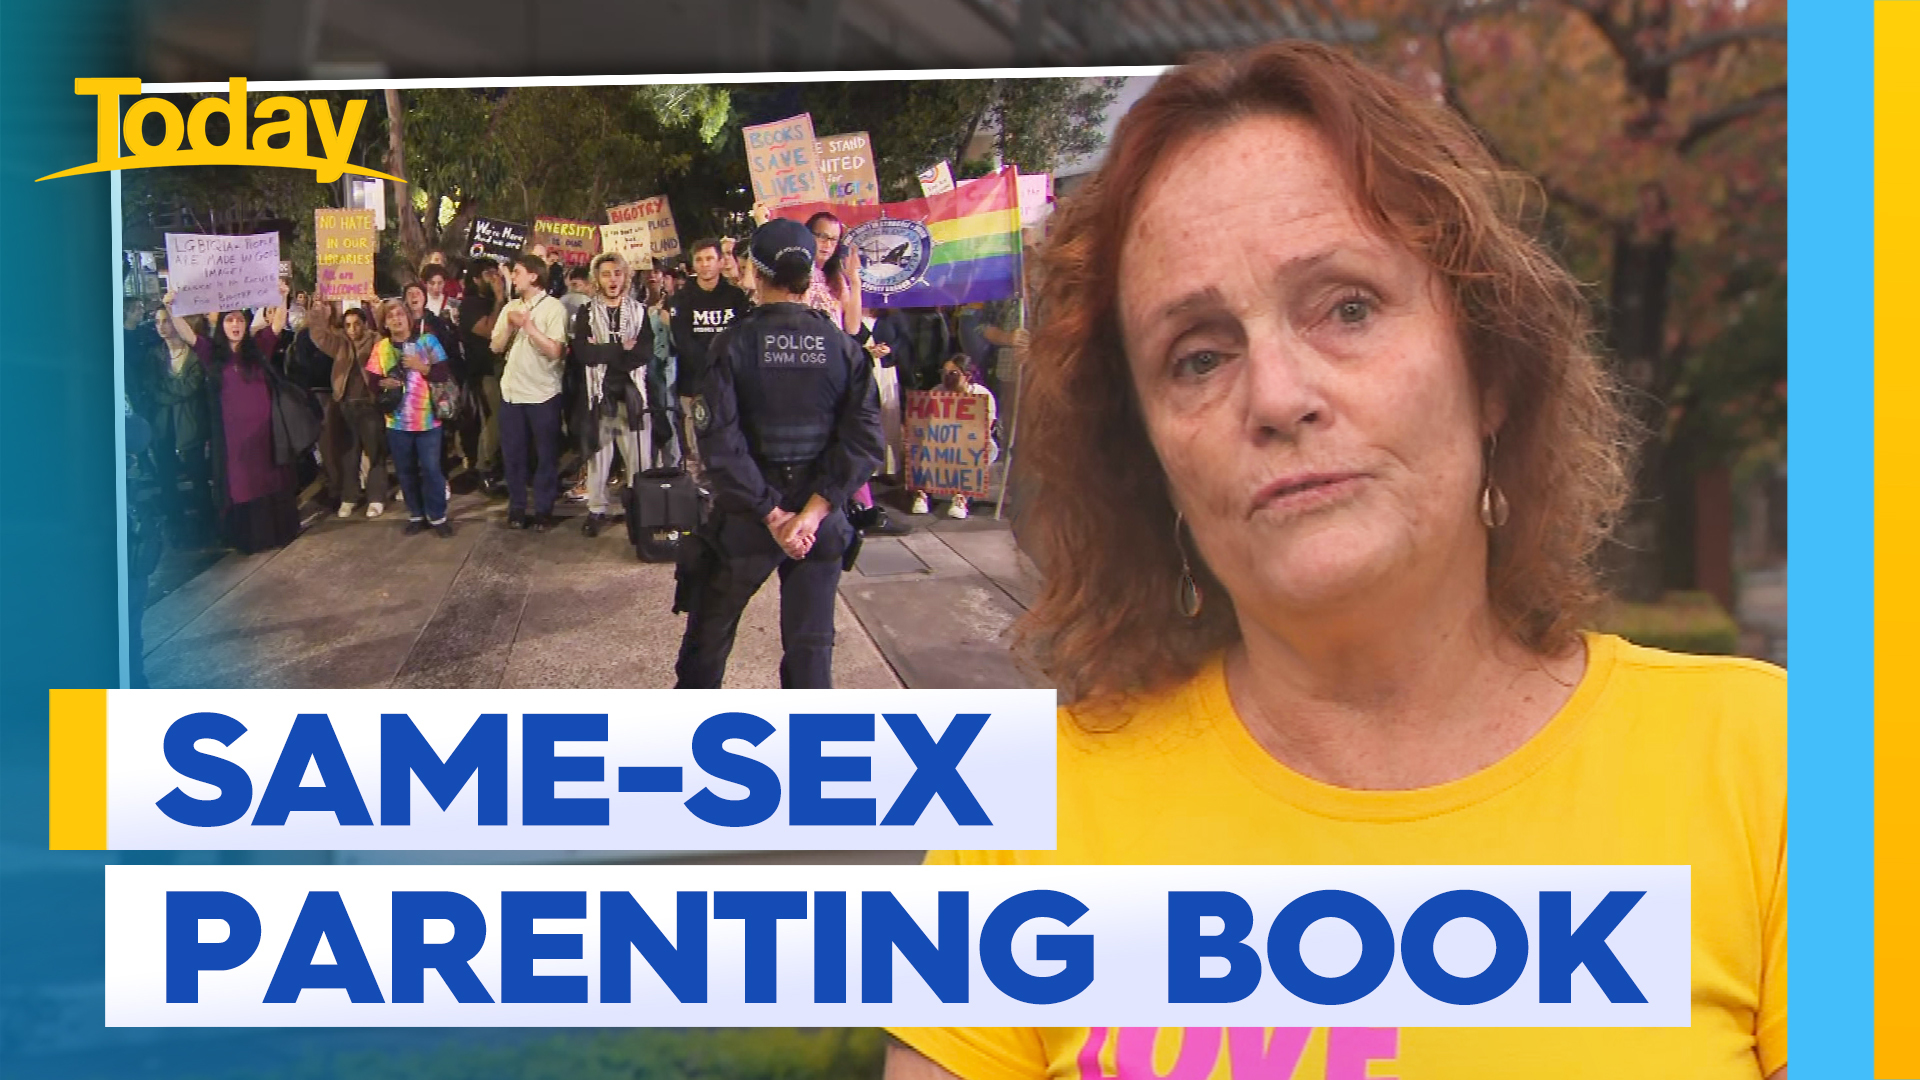 Same sex parenting book ban overturned after fiery debate